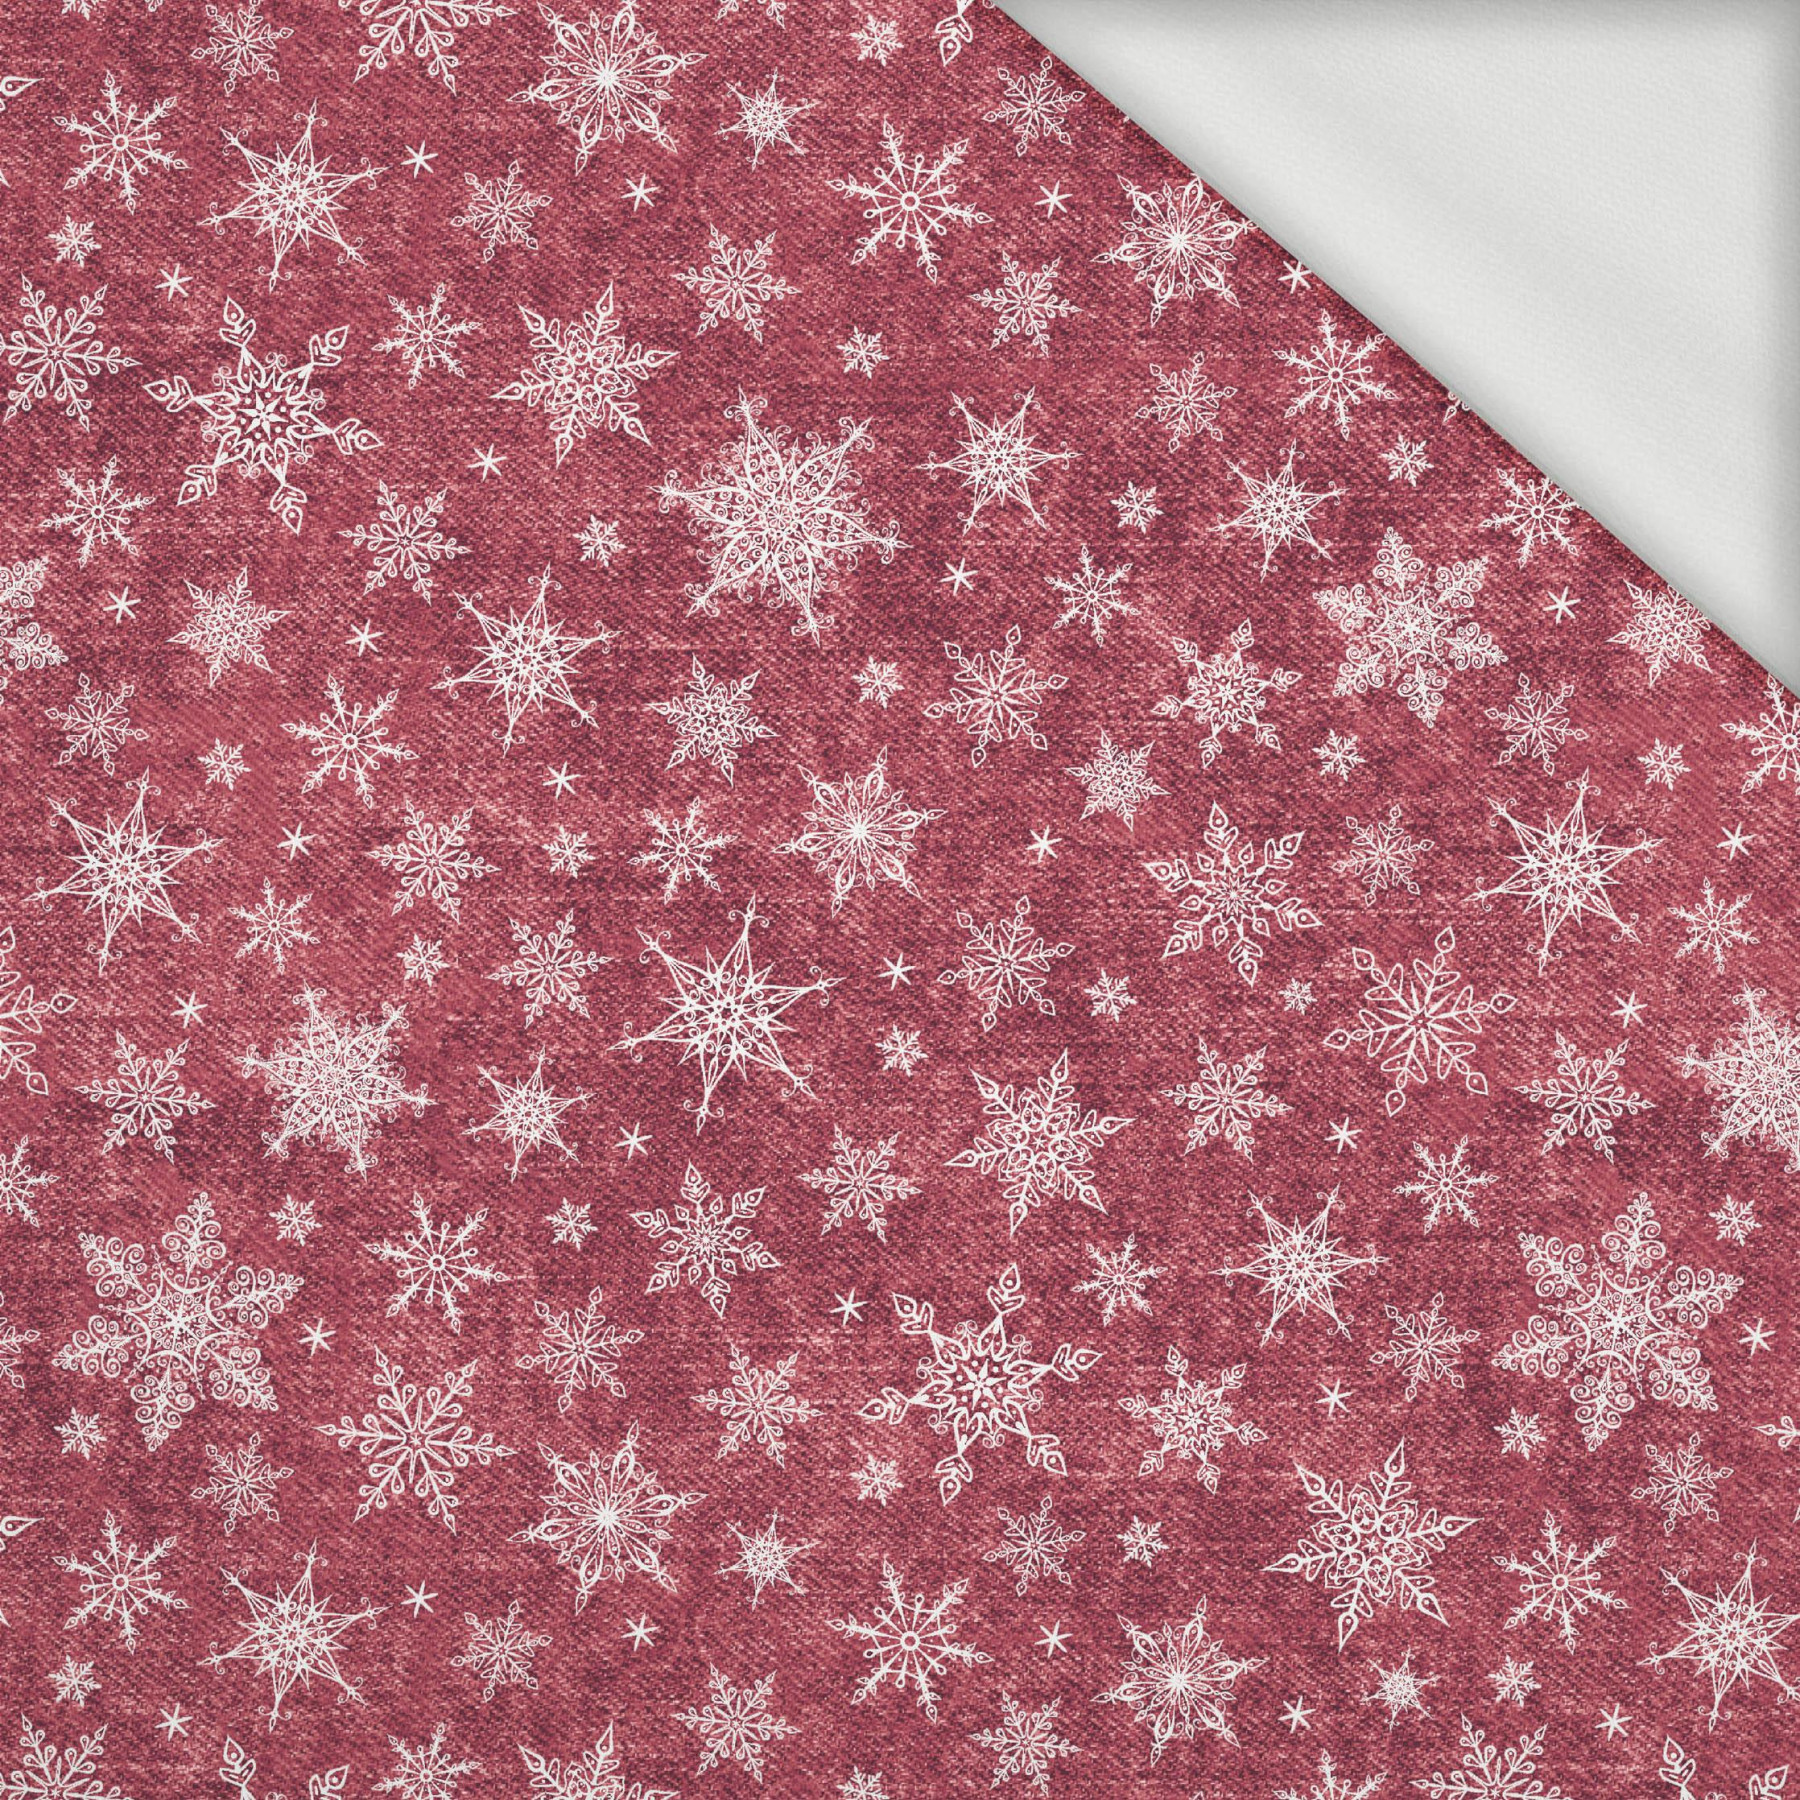 SNOWFLAKES PAT. 2 / ACID WASH MAROON  - looped knit fabric